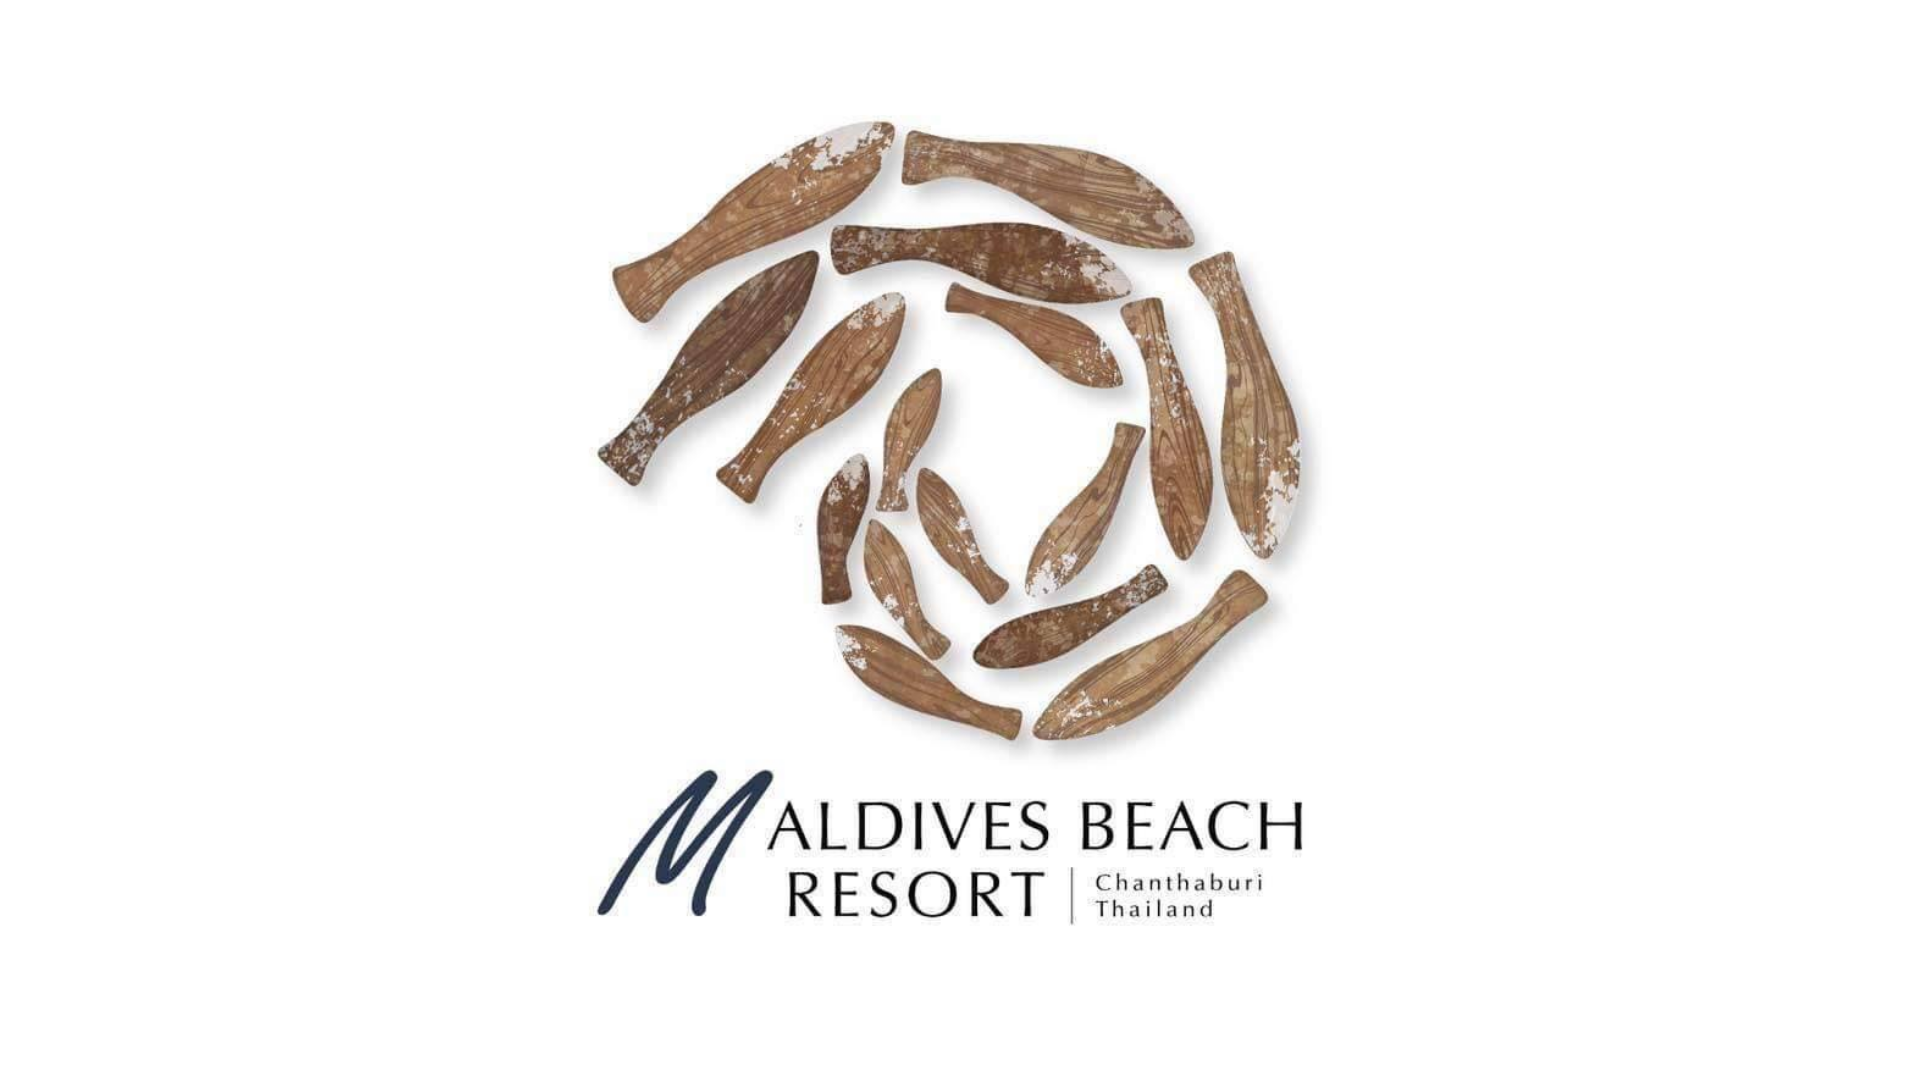 Maldives Beach Resort